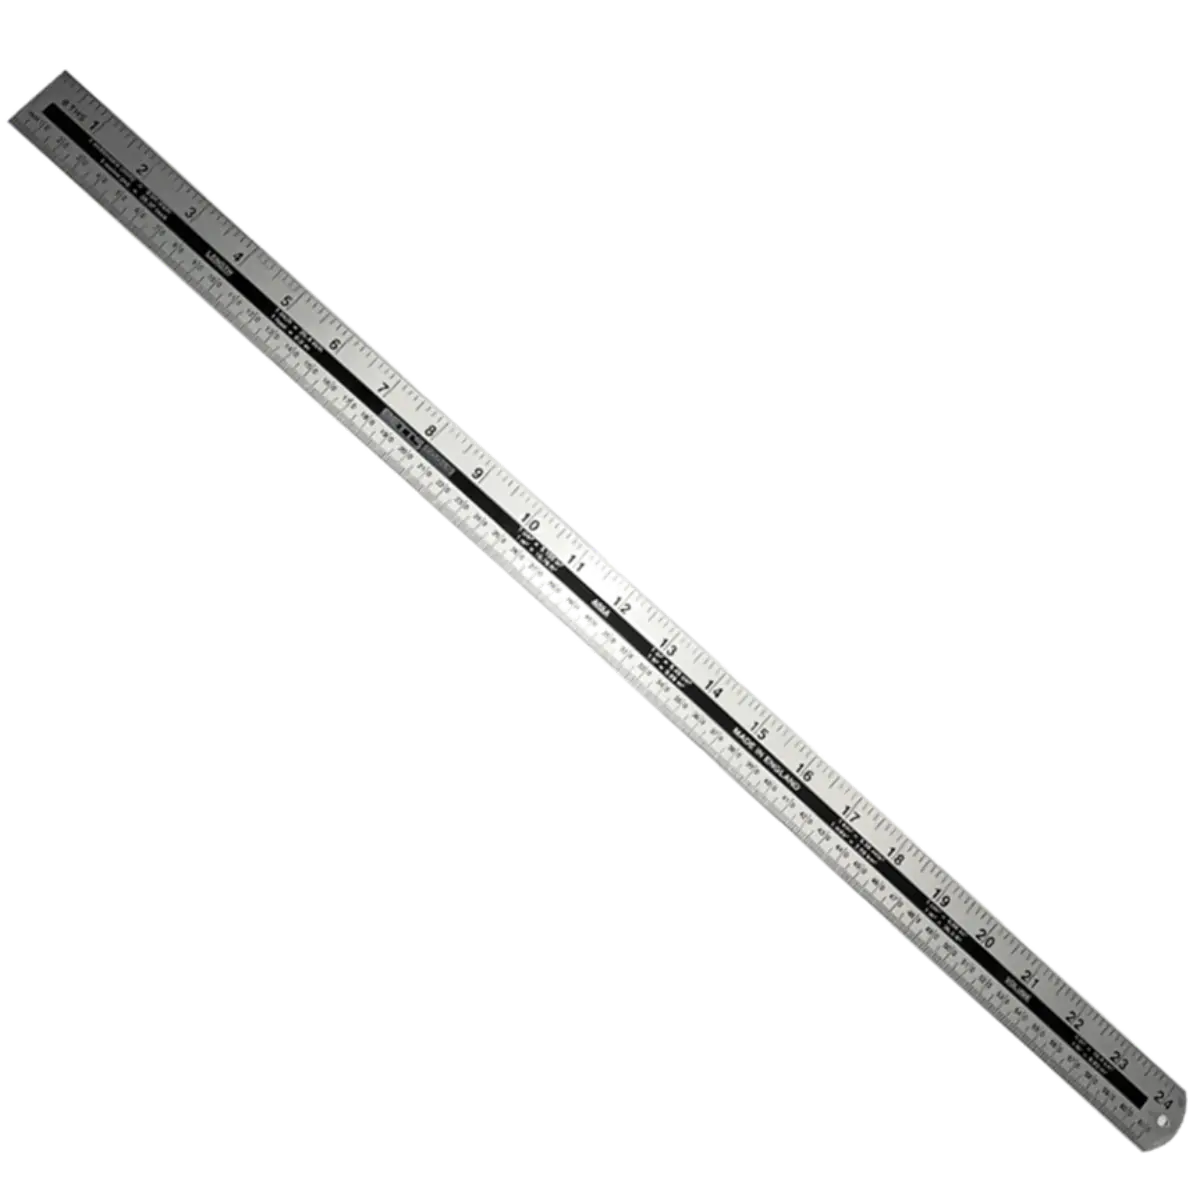 Anodised Aluminium Metal Rulers - 12" or 24"